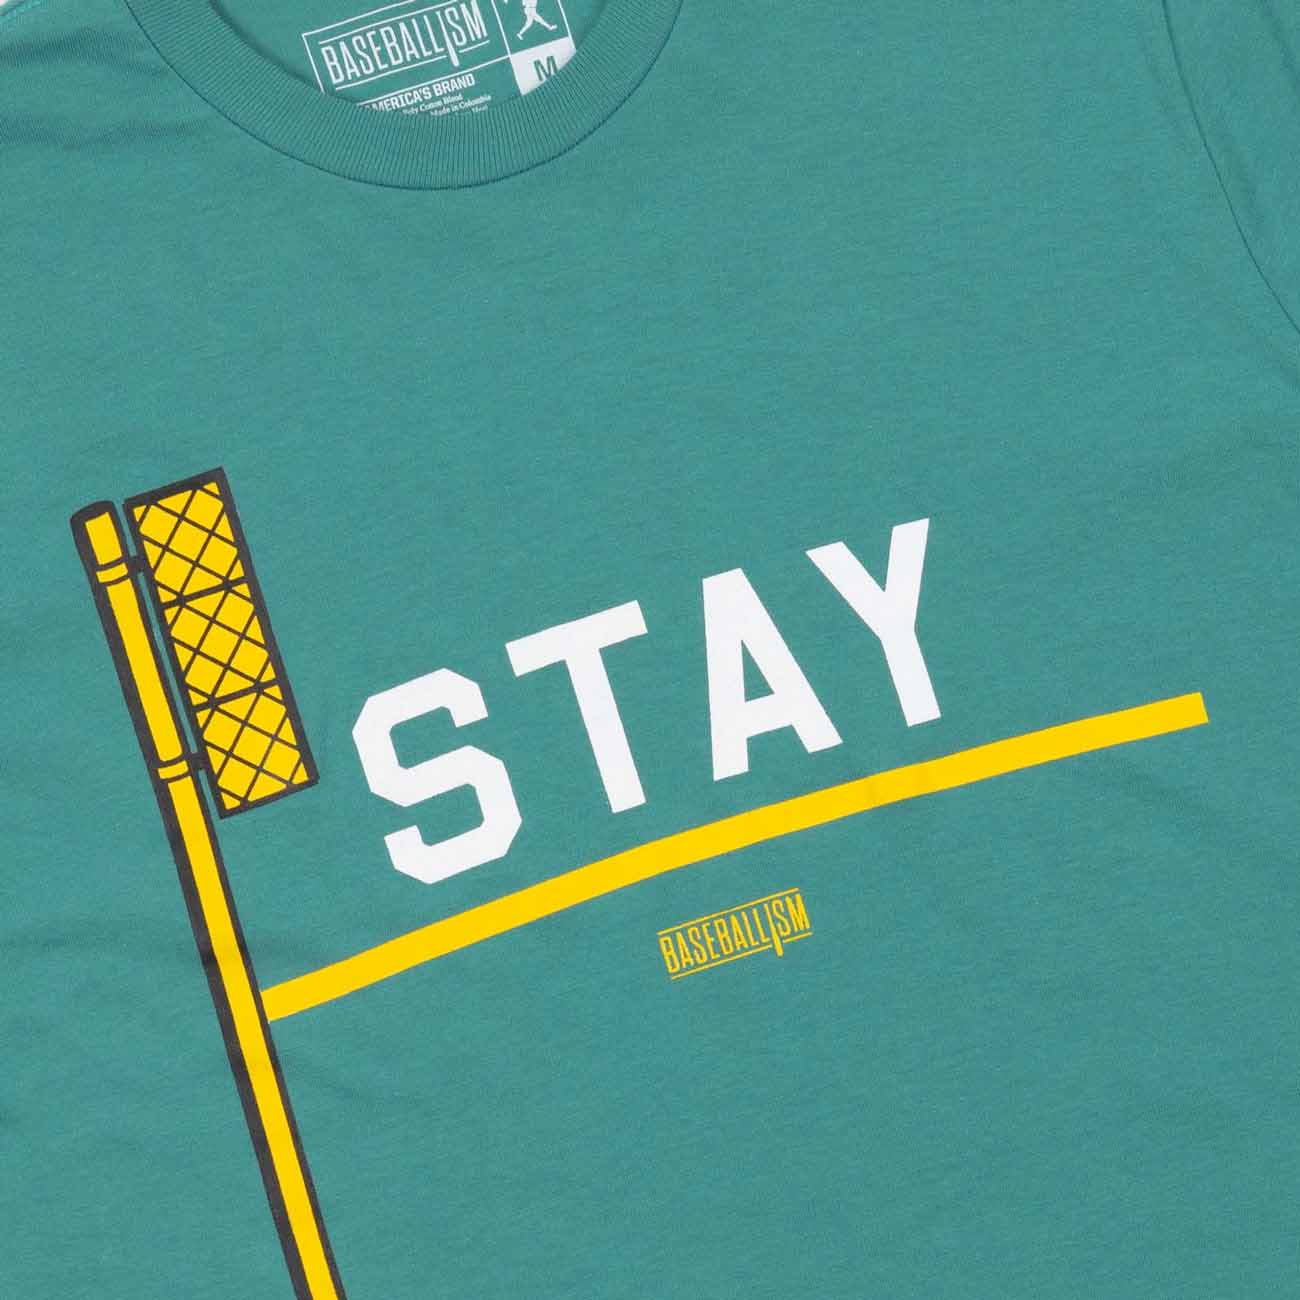 Baseballism Stay Fair 2.0 Adult T-Shirt